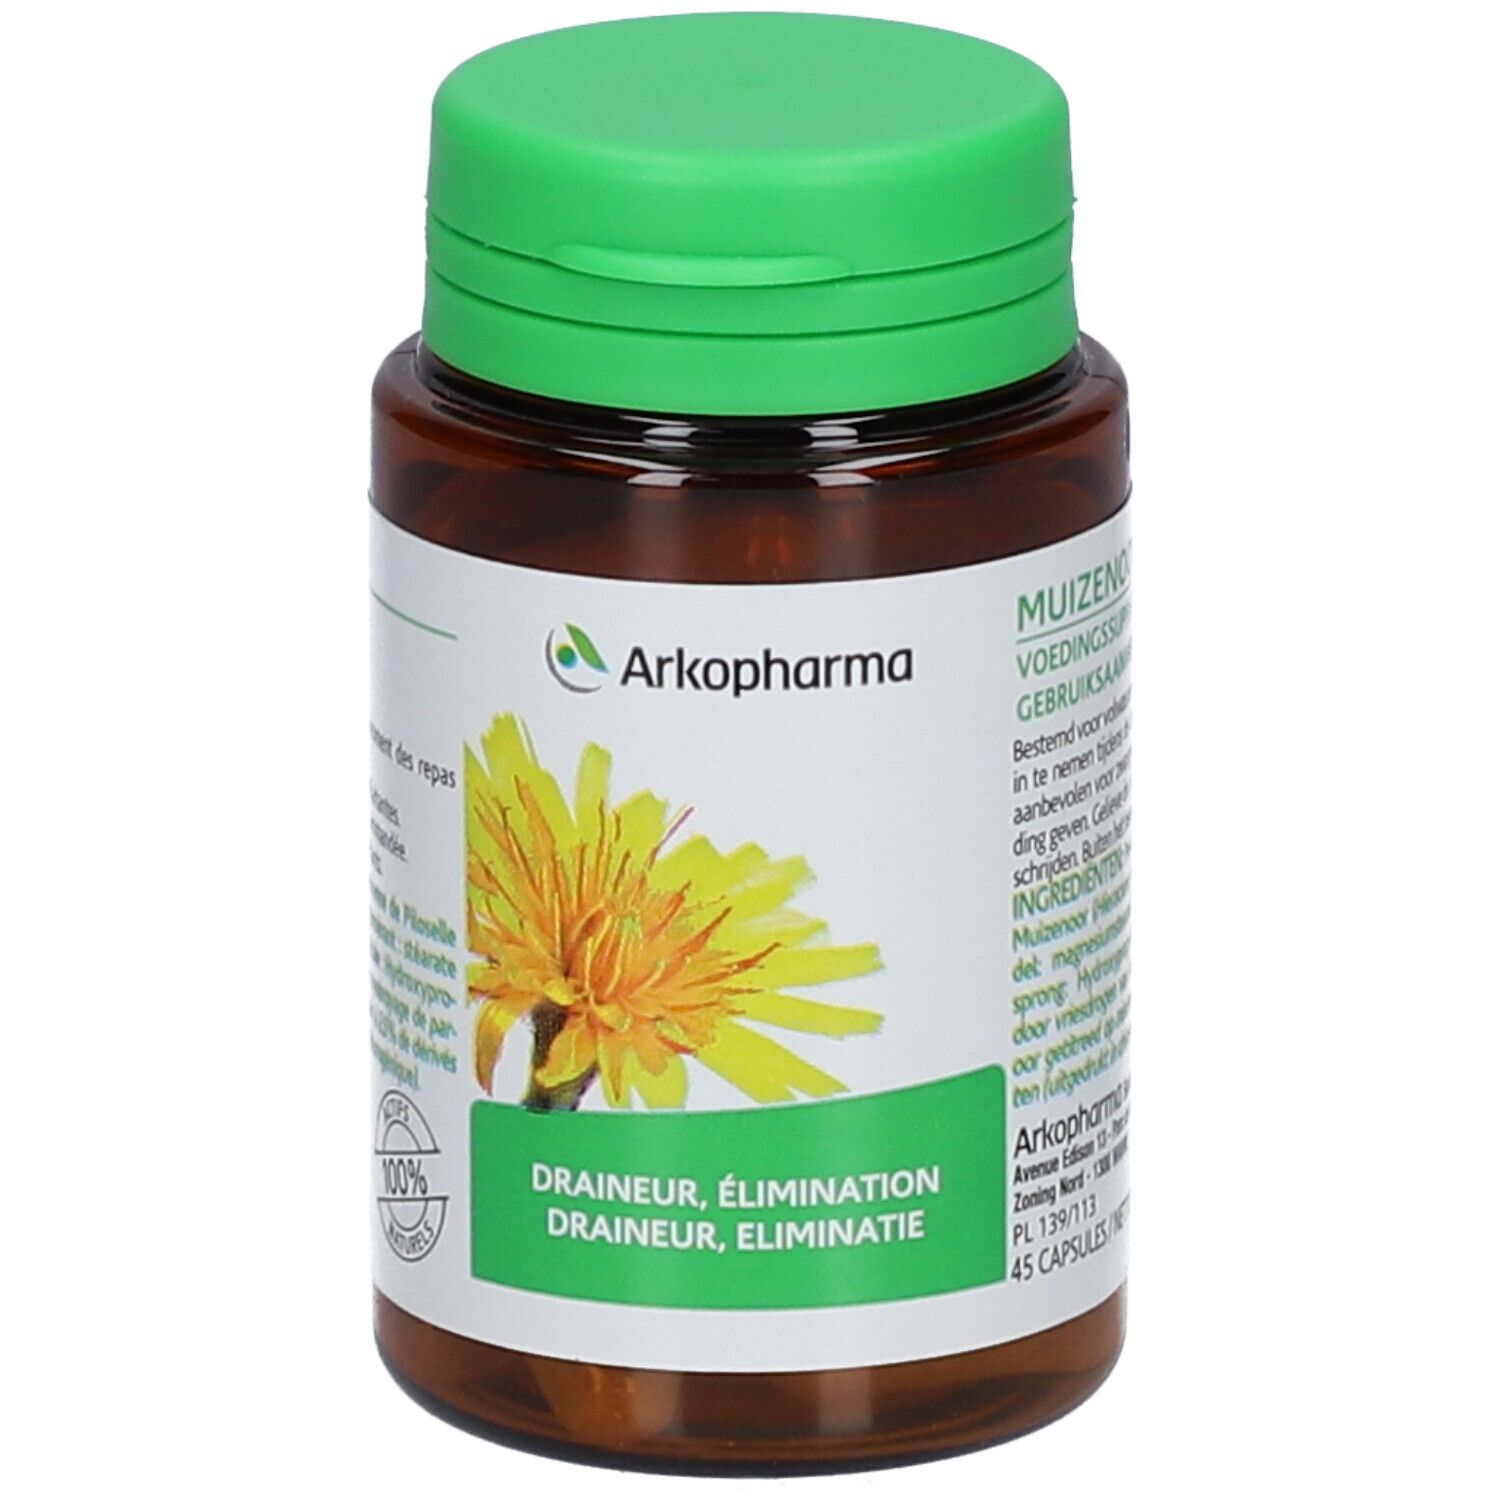 Arkopharma Arkogélules® Piloselle